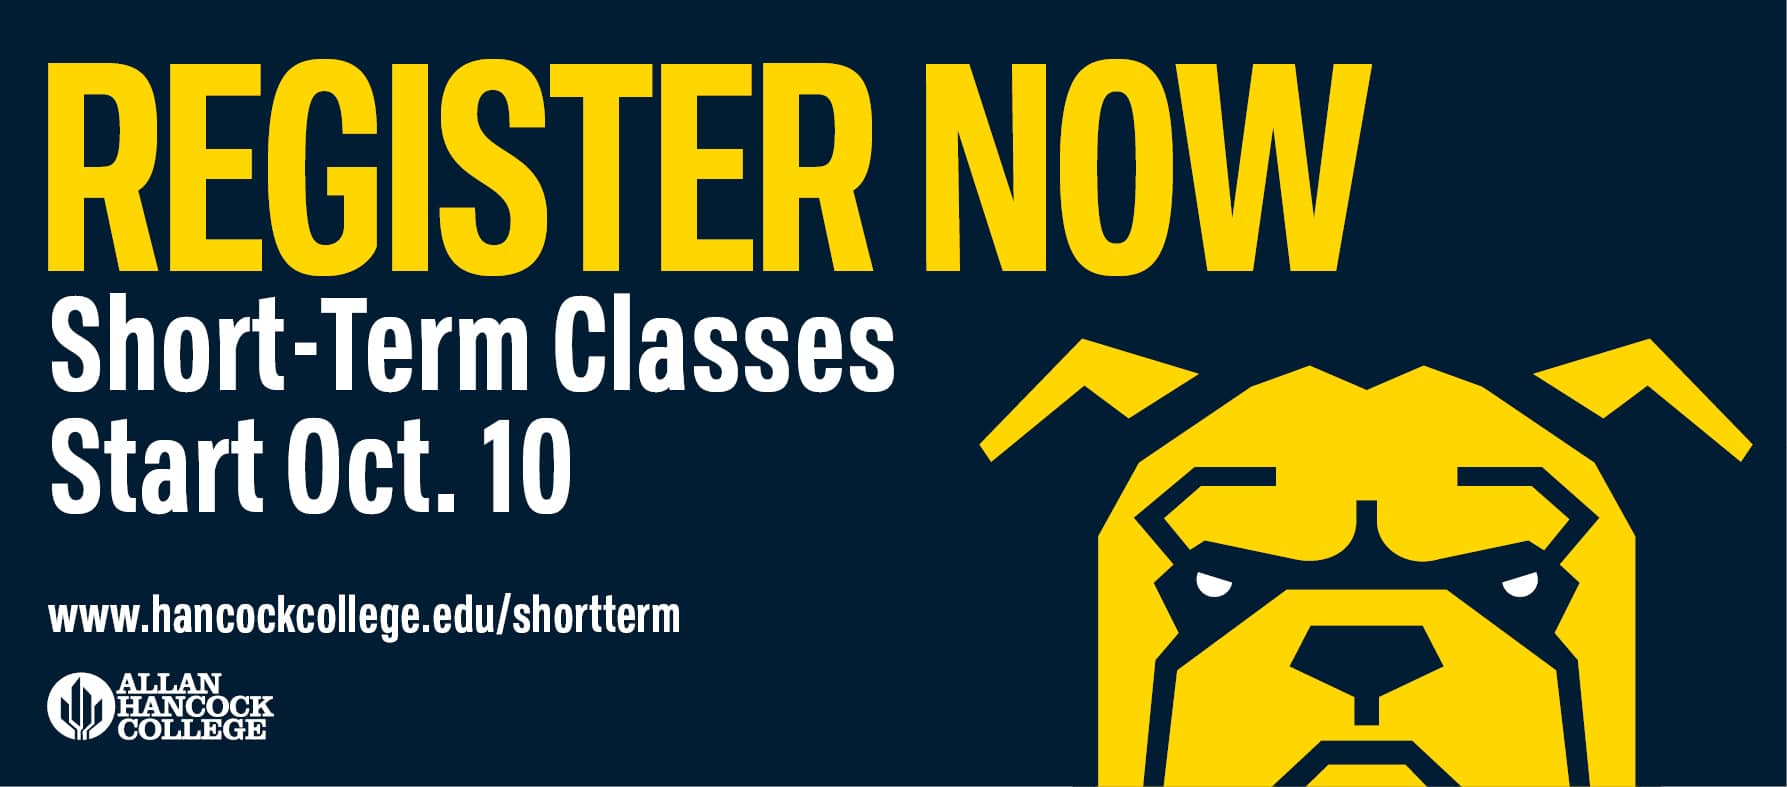 Register Now Short-term classes start Oct. 10